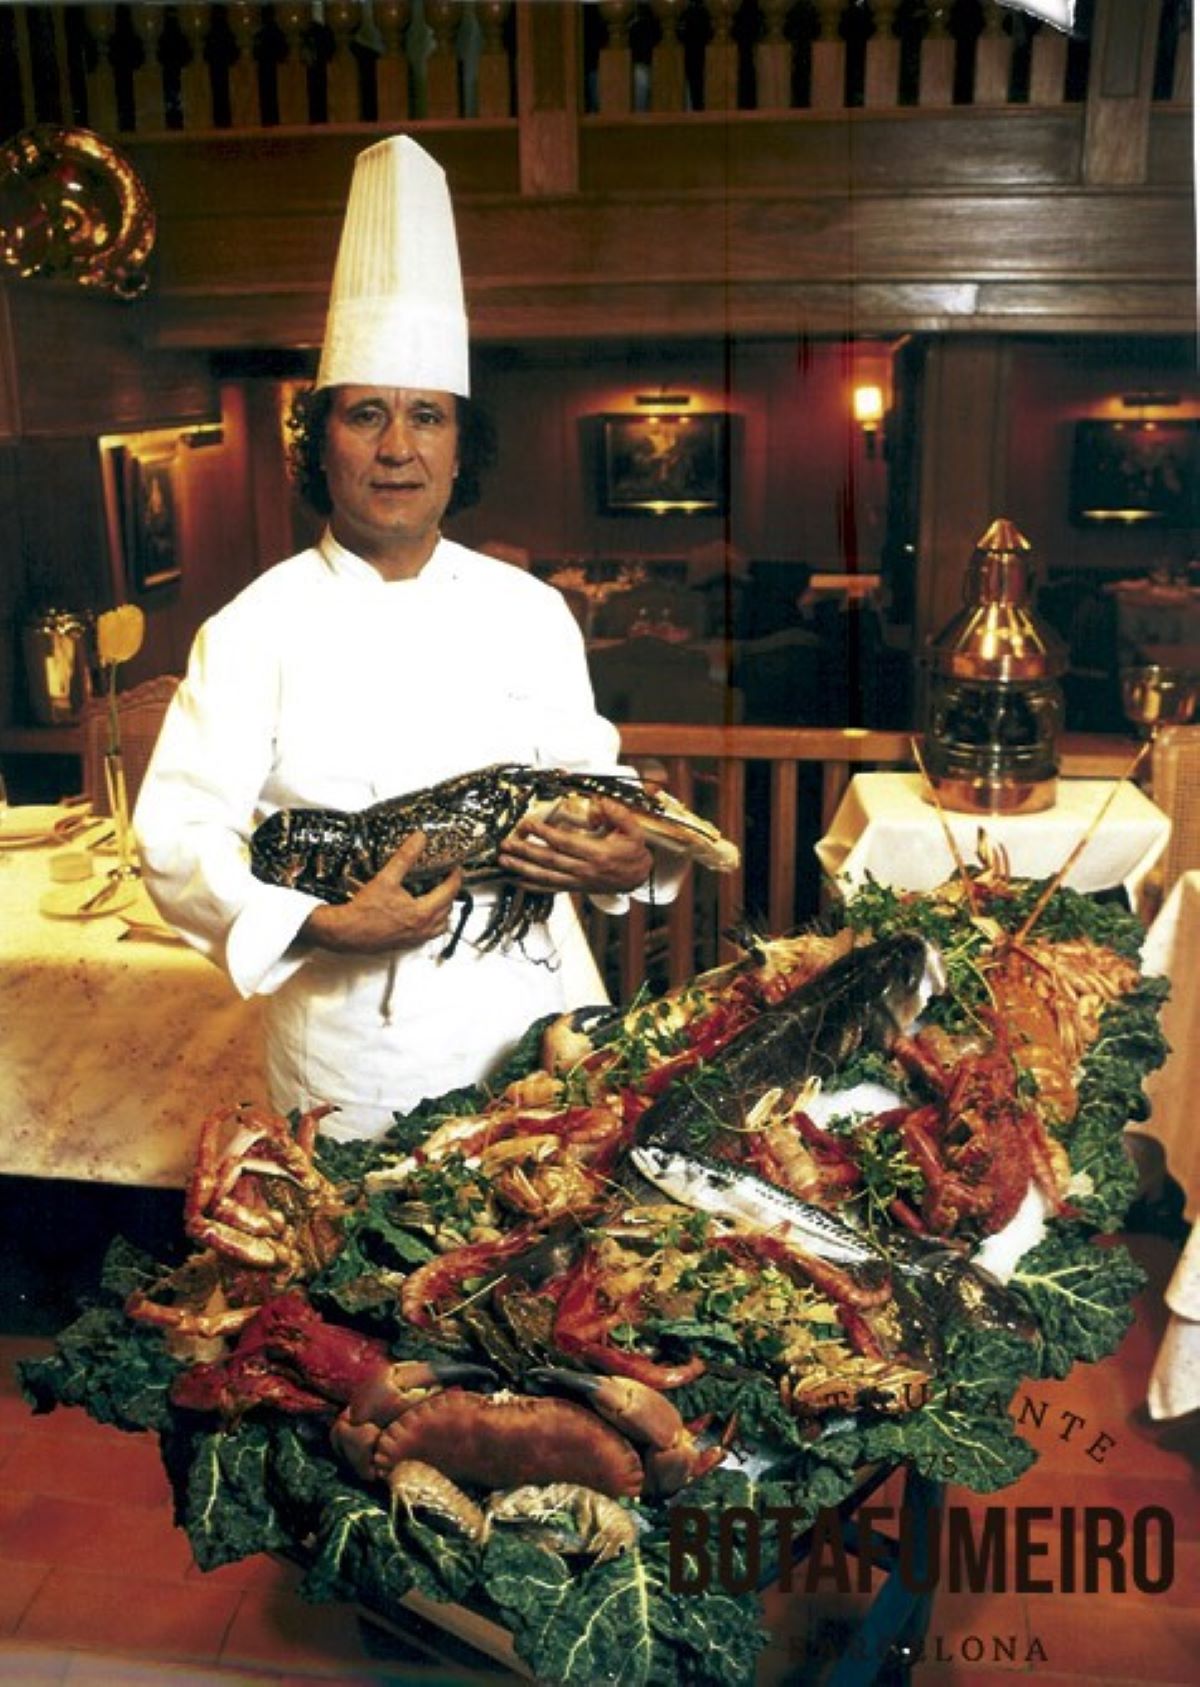 El famoso restaurante de Barcelona donde David Beckham se come un festín de marisco